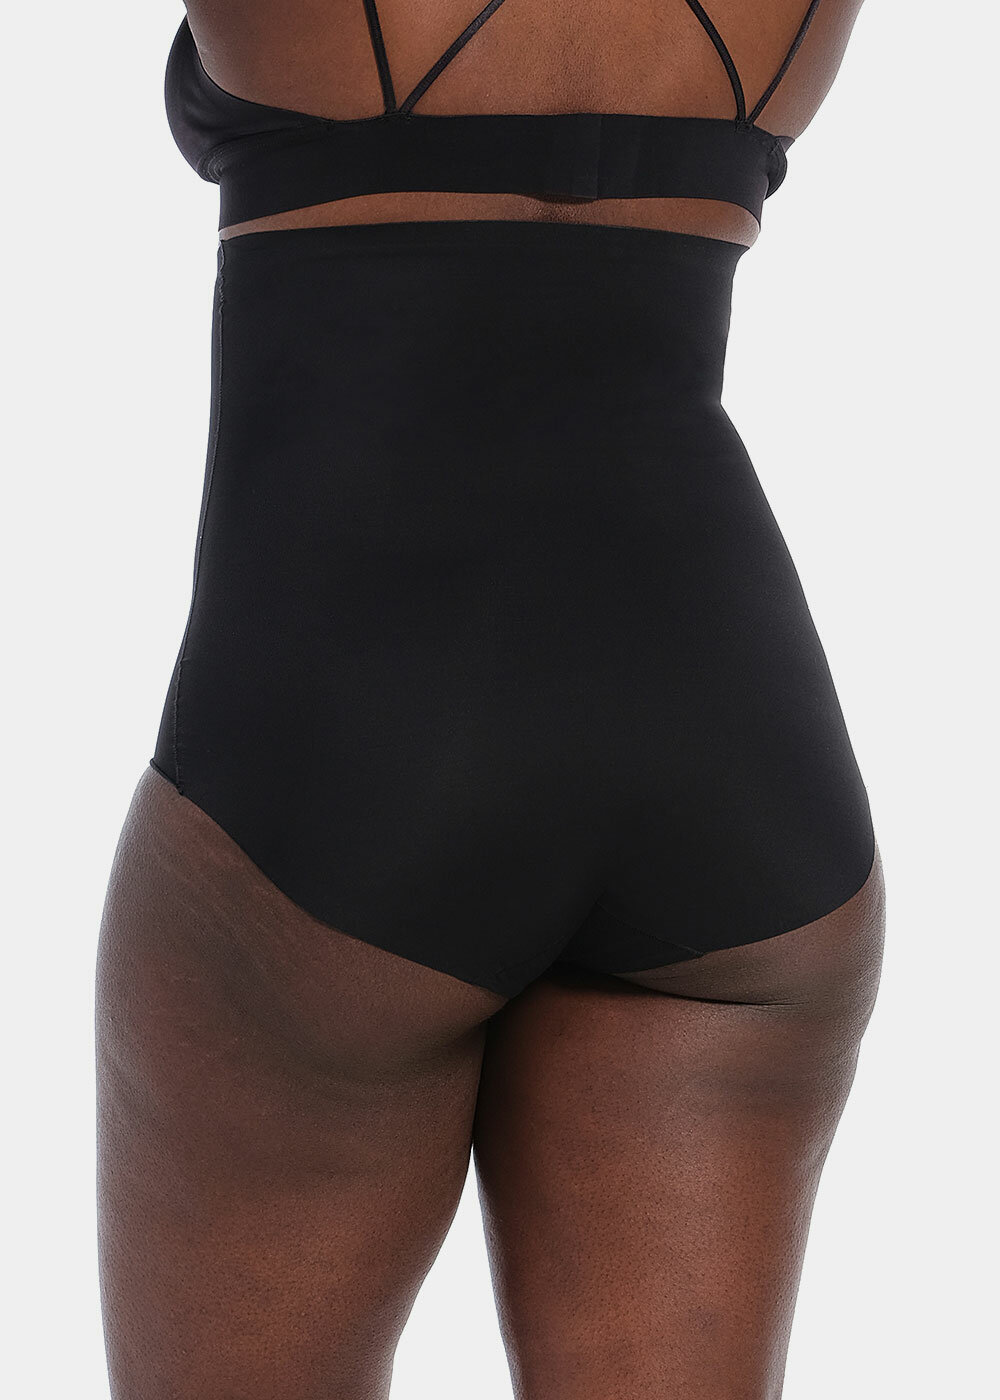 SPANX Spotlight On Lace Medium Control Very Black Brief Panty NEW Womens Sz  M